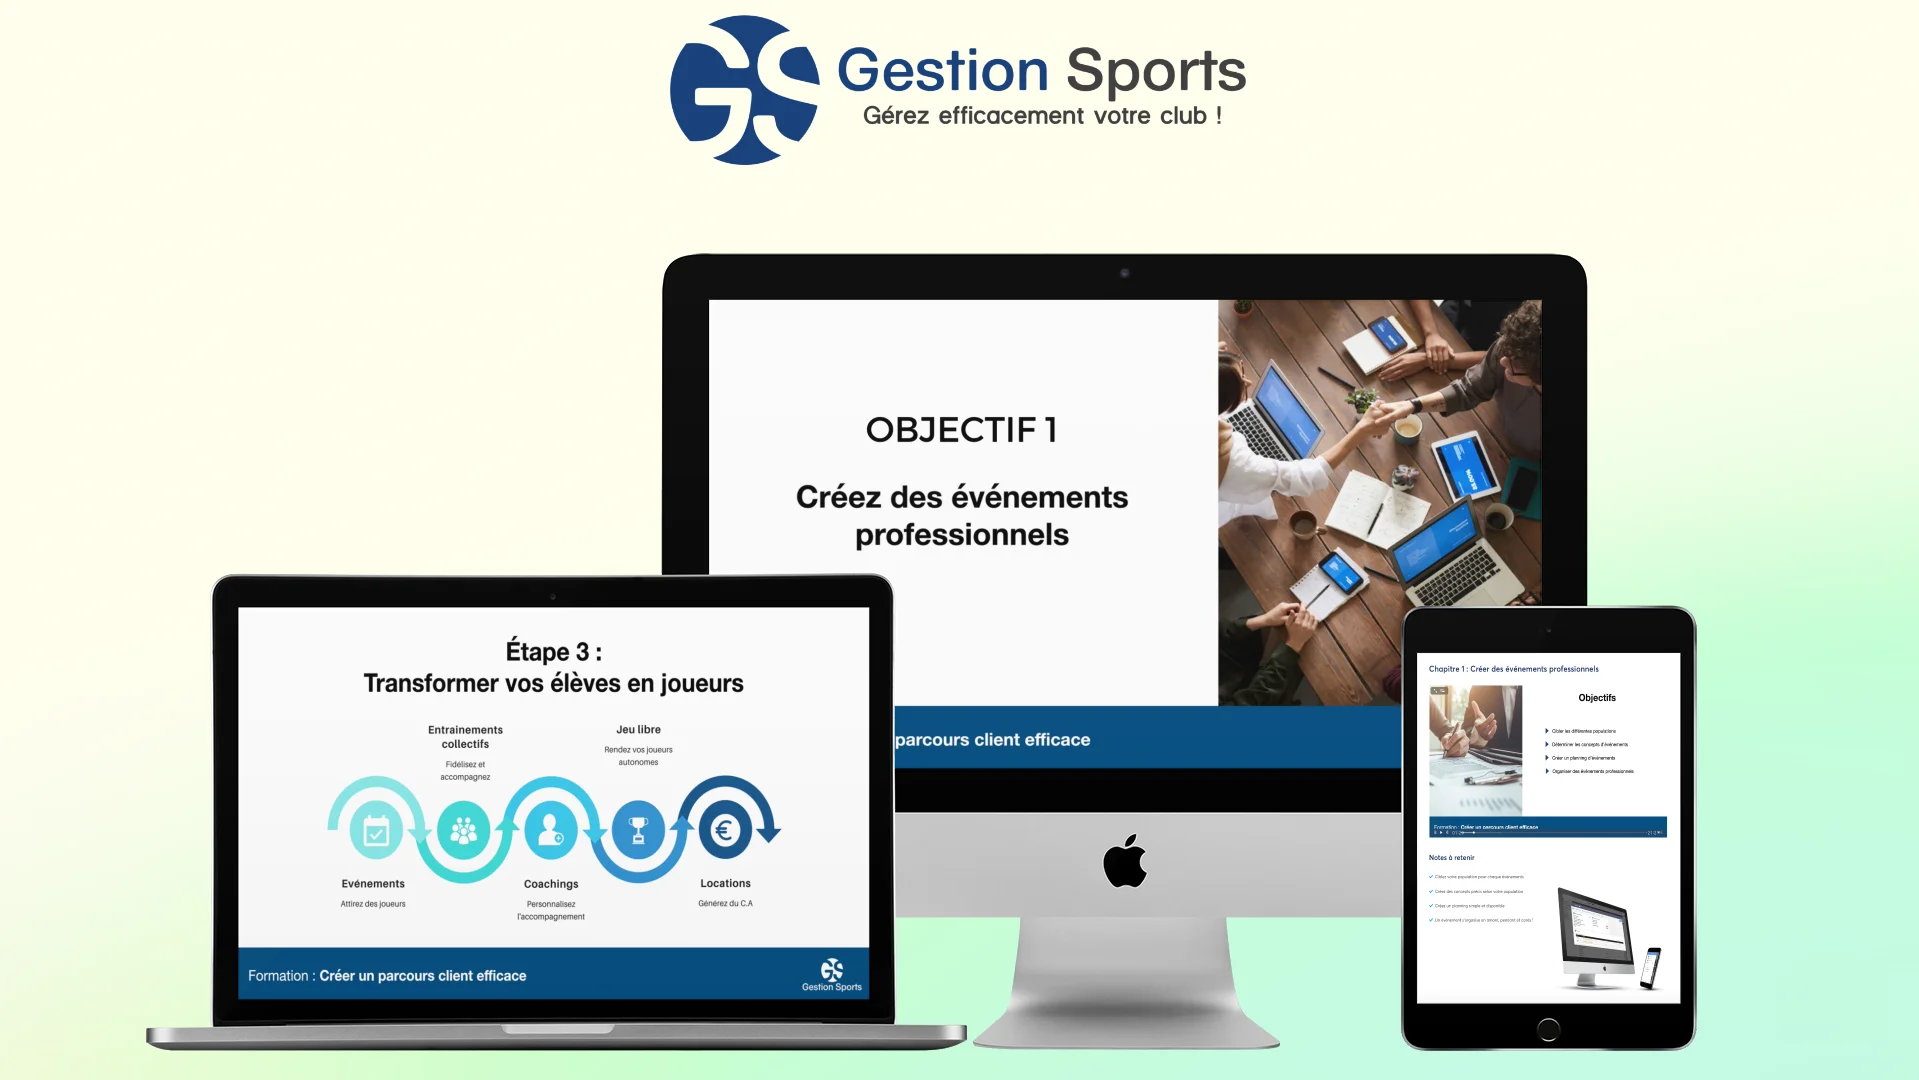 Gestion sports innovation macbook iphone ipadel